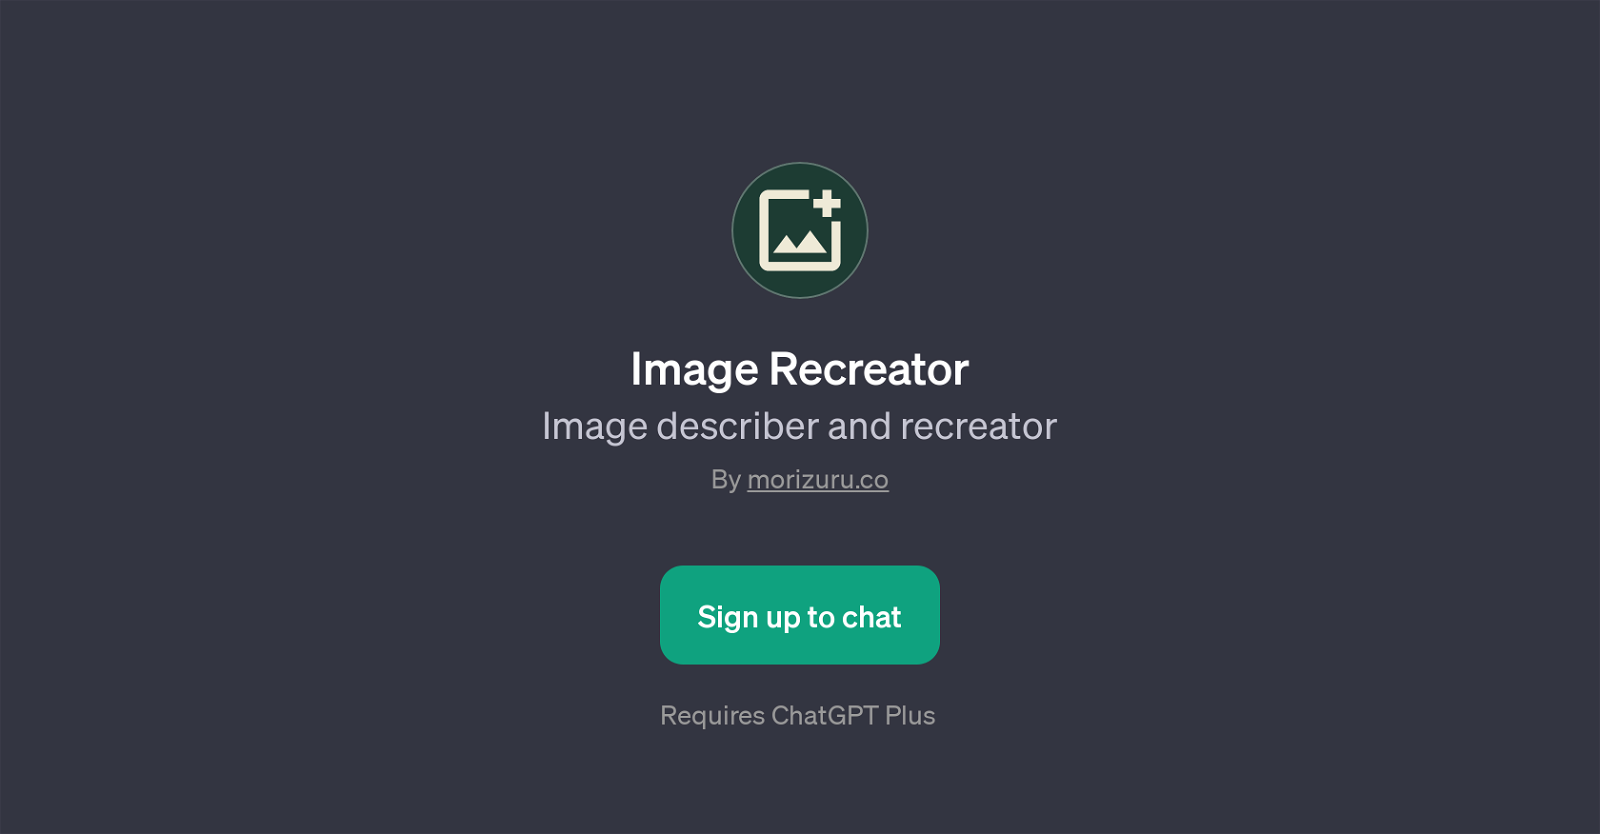 Image Recreator website